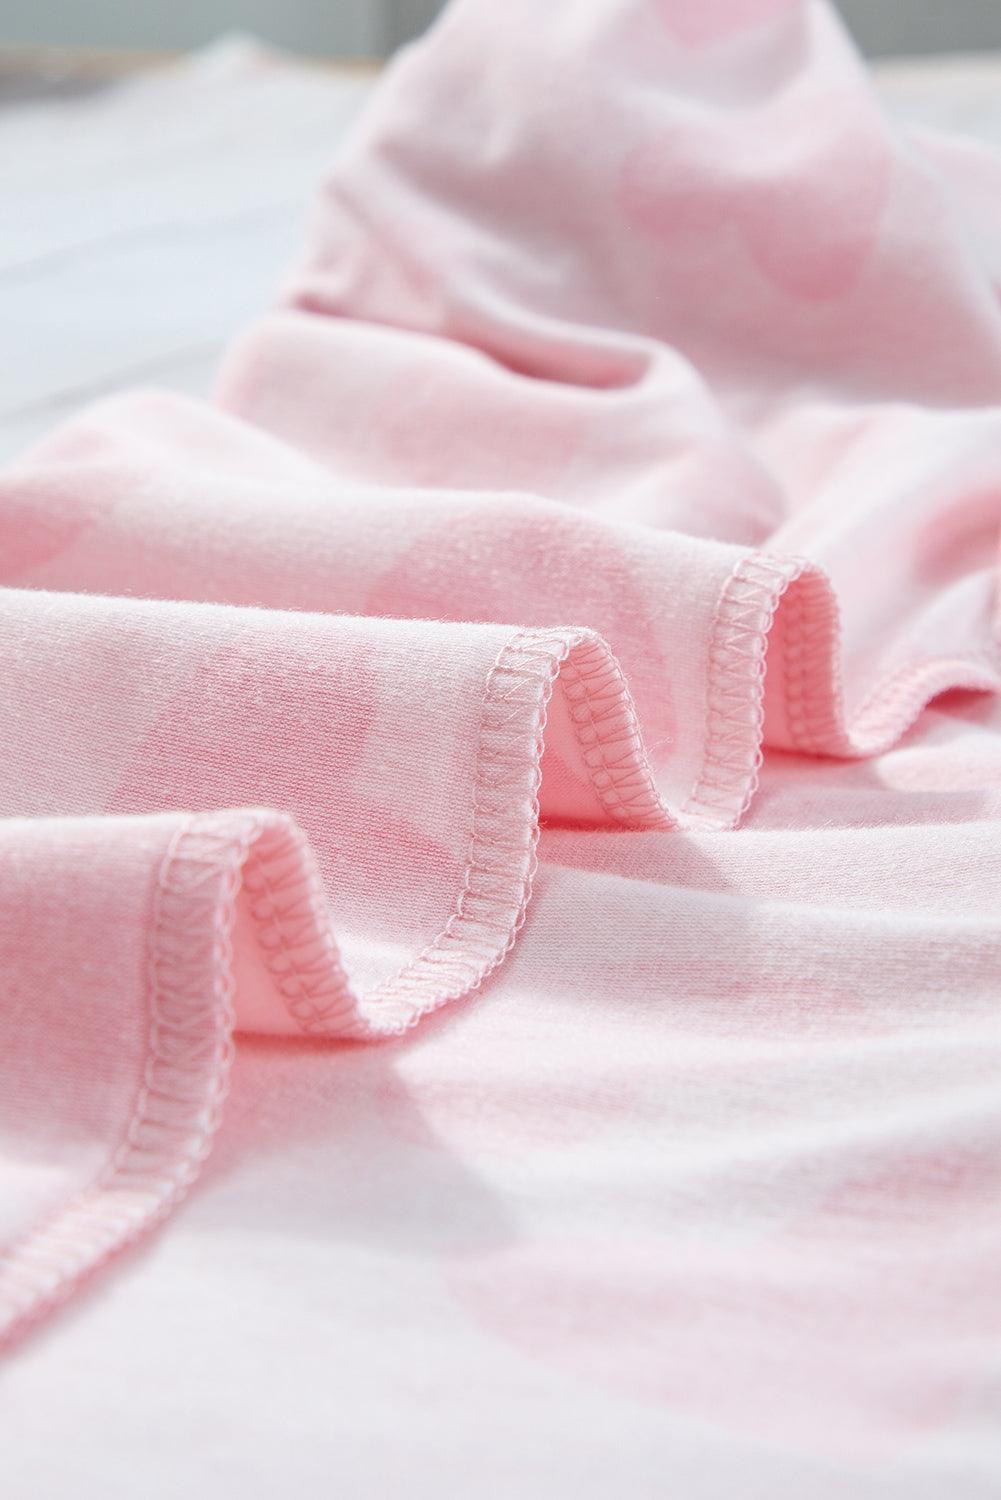 Pink Valentine Heart Shape Print Long Sleeve Top Shorts Lounge Set - Ash Boutique